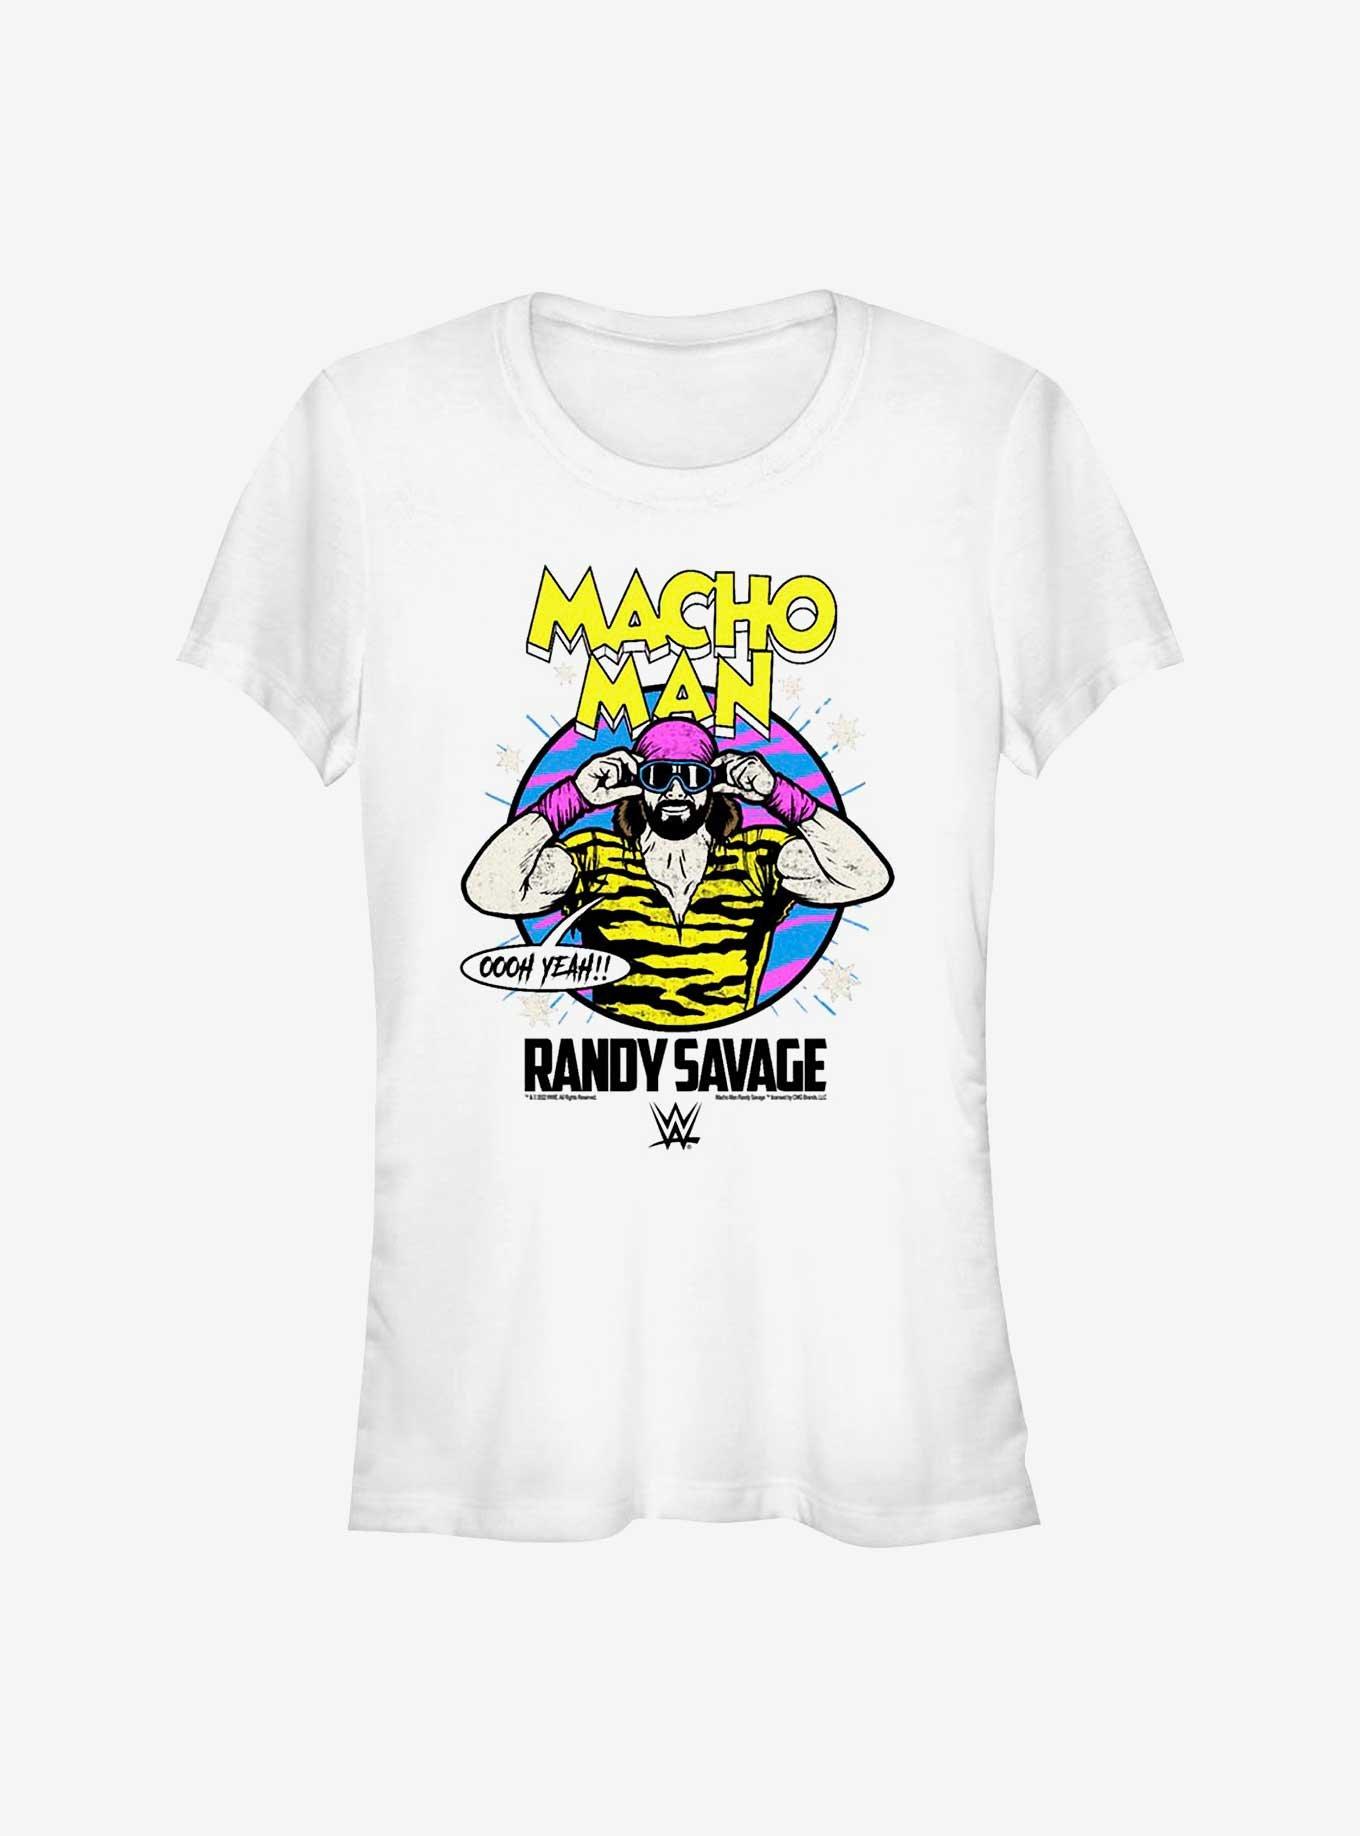 WWE Macho Man Randy Savage Oooh Yea! Girls T-Shirt, , hi-res